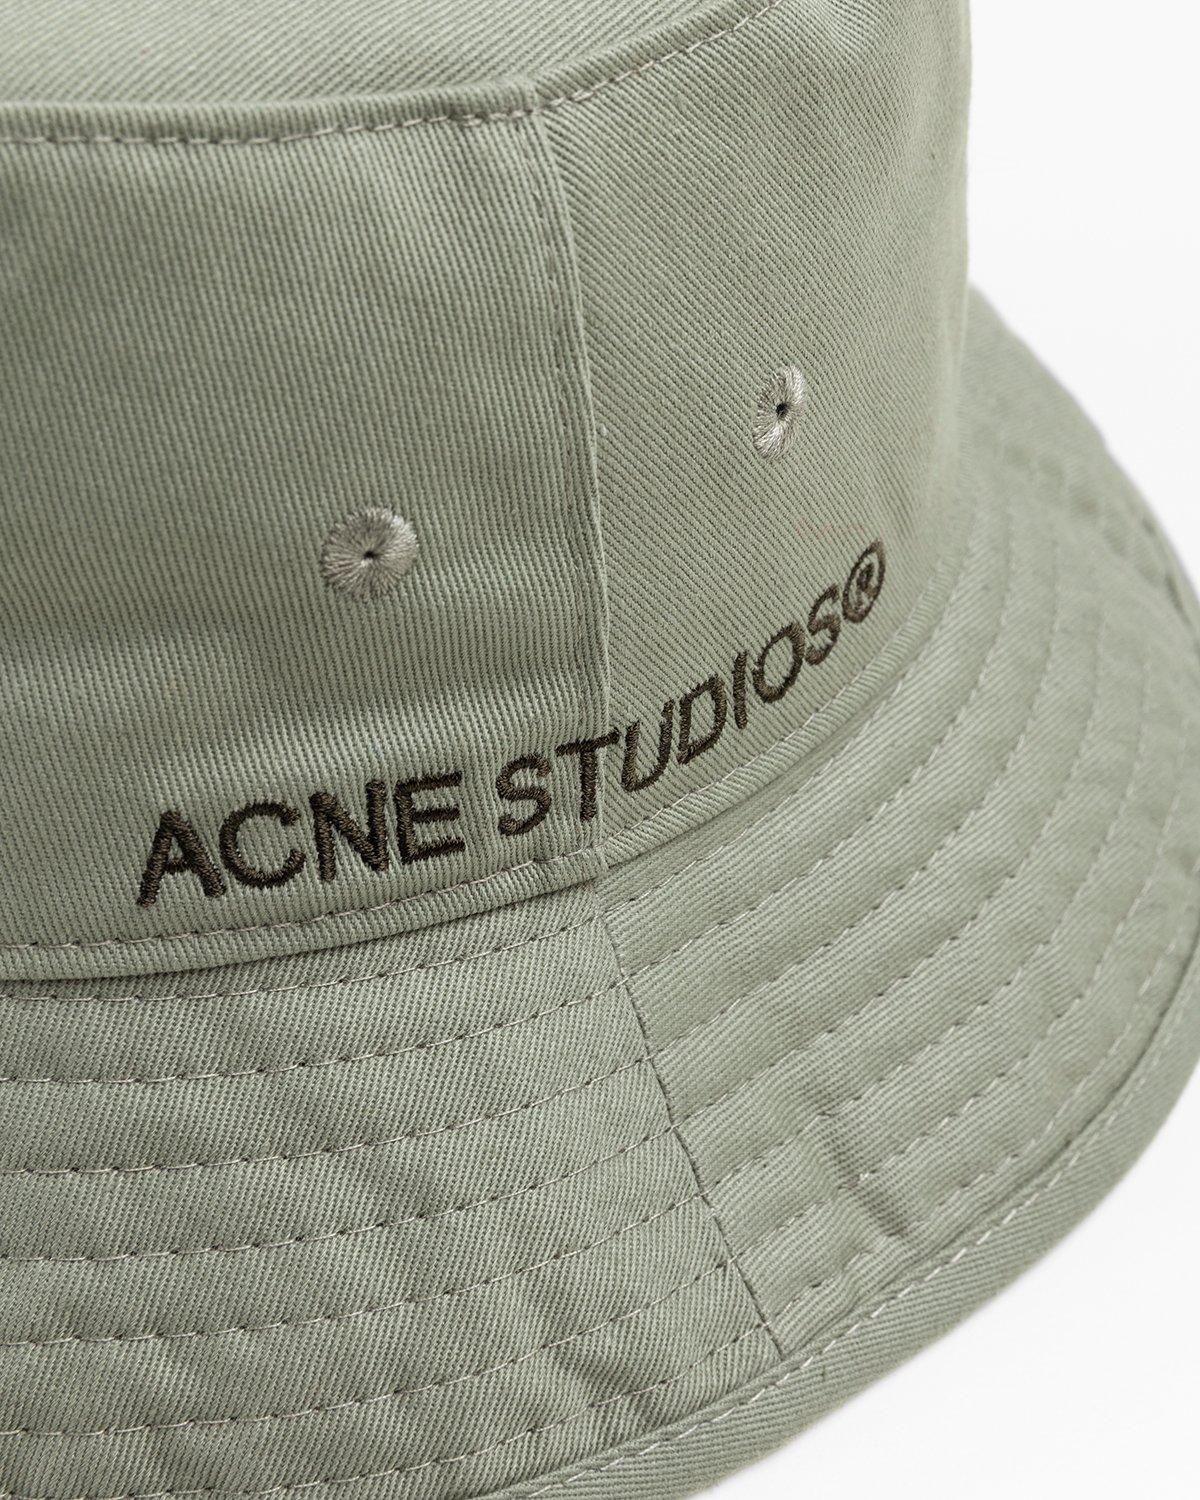 Acne Studios - Twill Bucket Hat Sage Green - Accessories - Green - Image 3